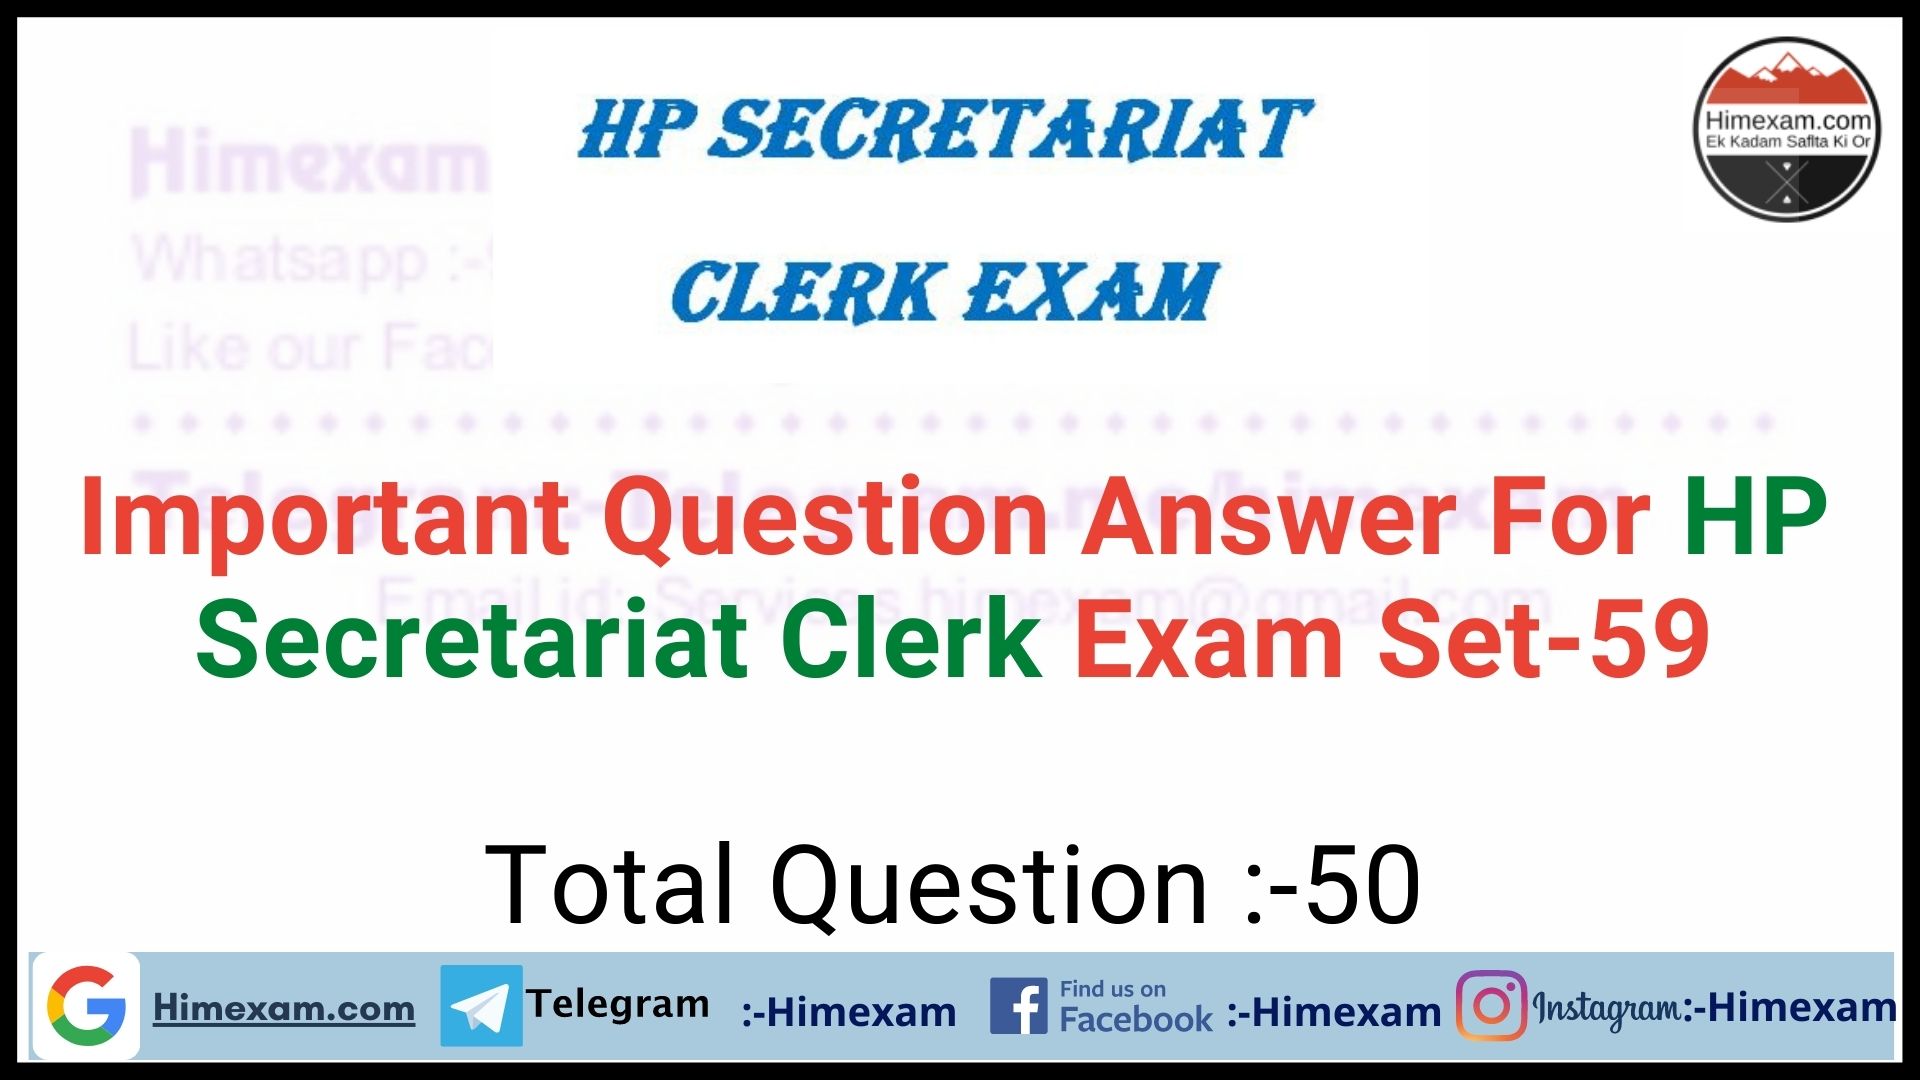 Important Question Answer For HP Secretariat Clerk Exam Set-59